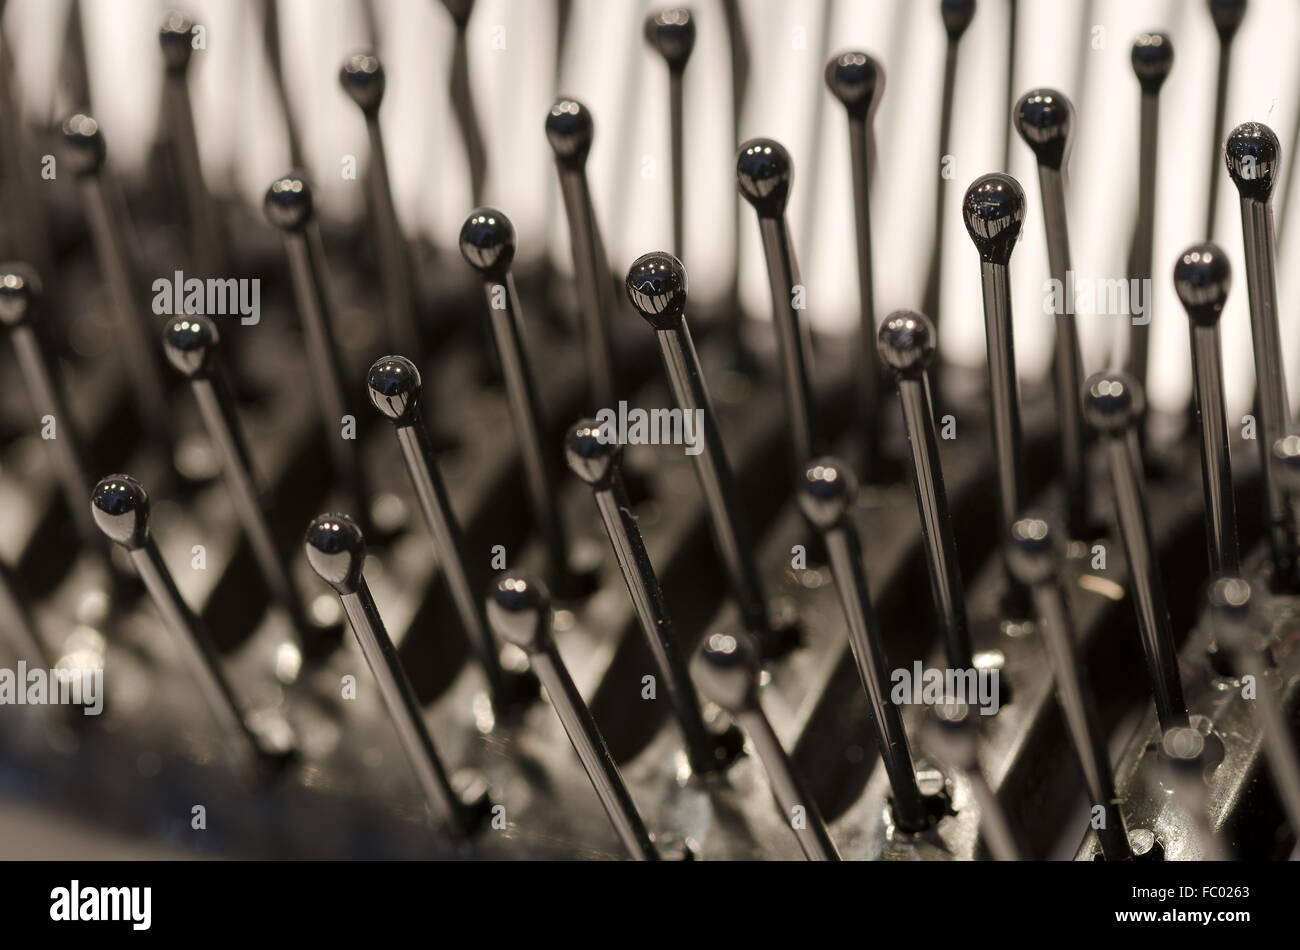 spikes of a black plastic hair brush Stock Photo